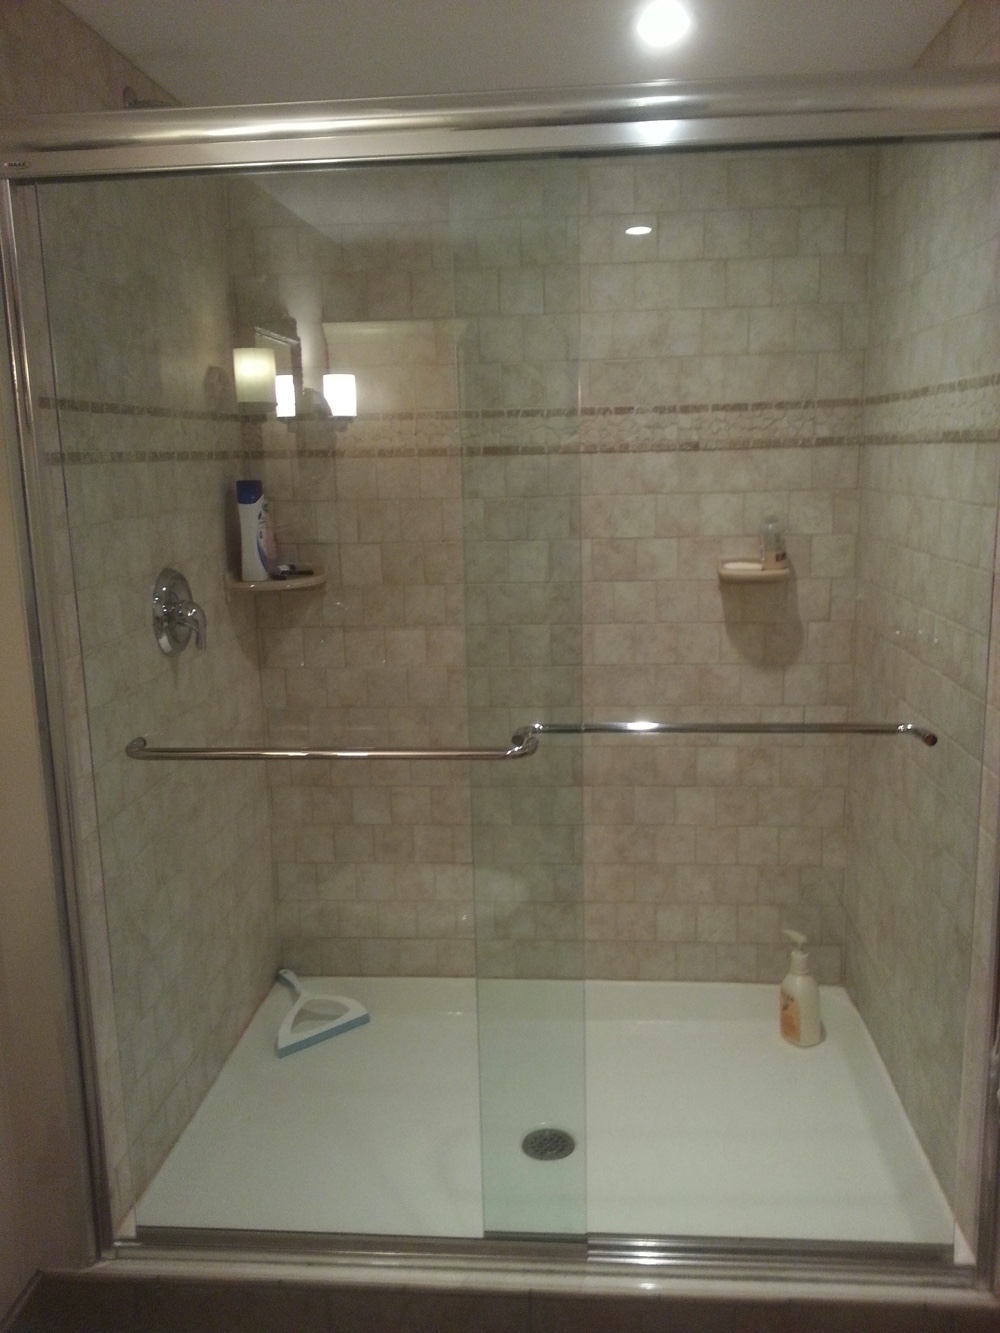 Blakey shower/tub: